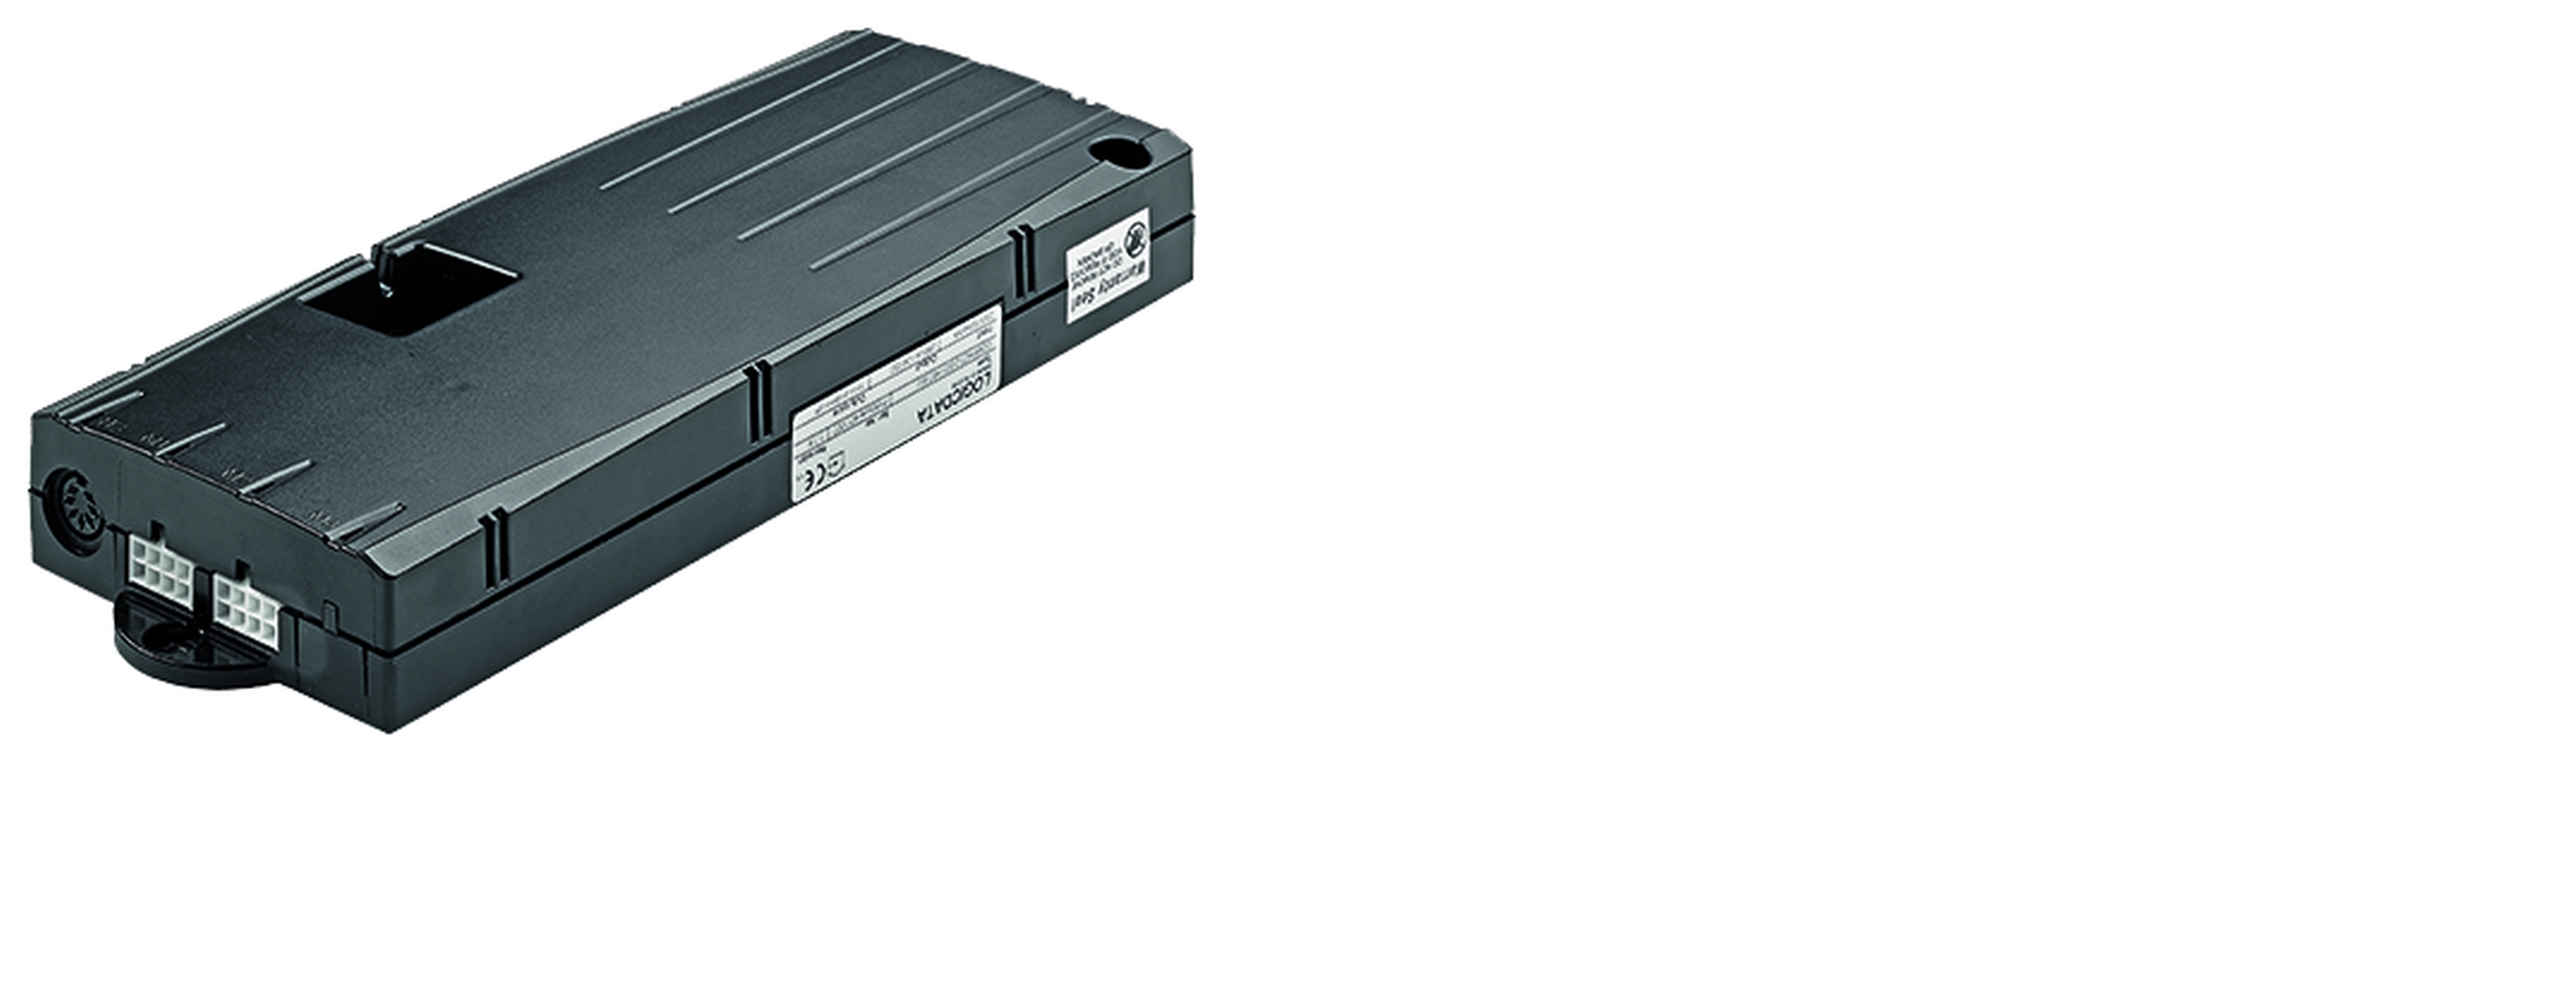 LegaMove Steuerung Compact-e-2 EU 230 V / 50 Hz